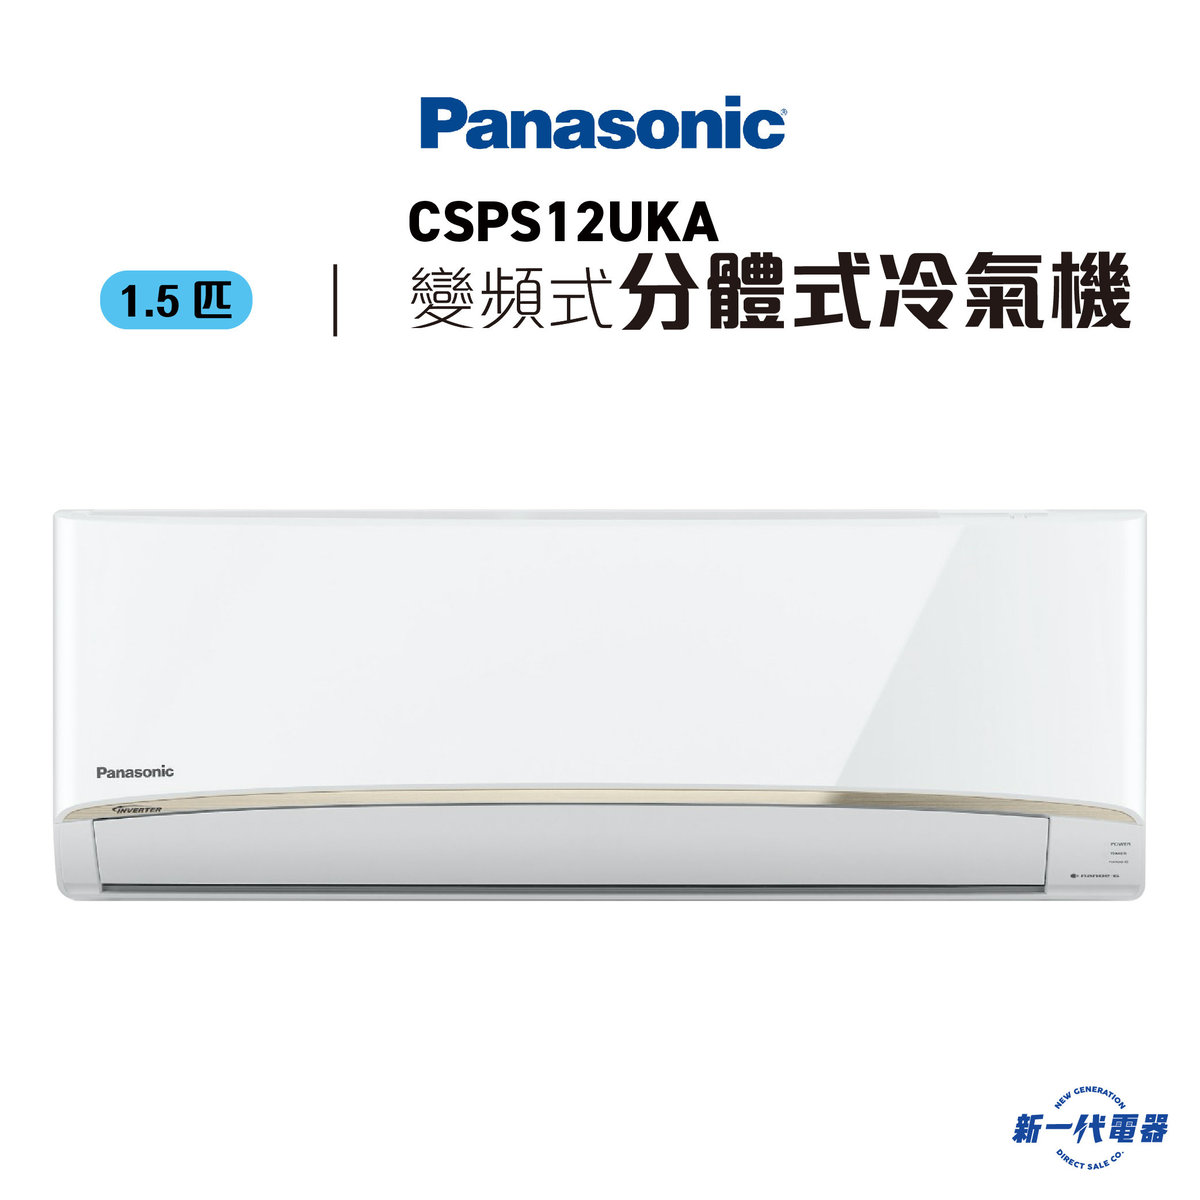 CSPS12UKA  -1.5HP "Inverter" Split Type Air-Conditioner (CS-PS12UKA)